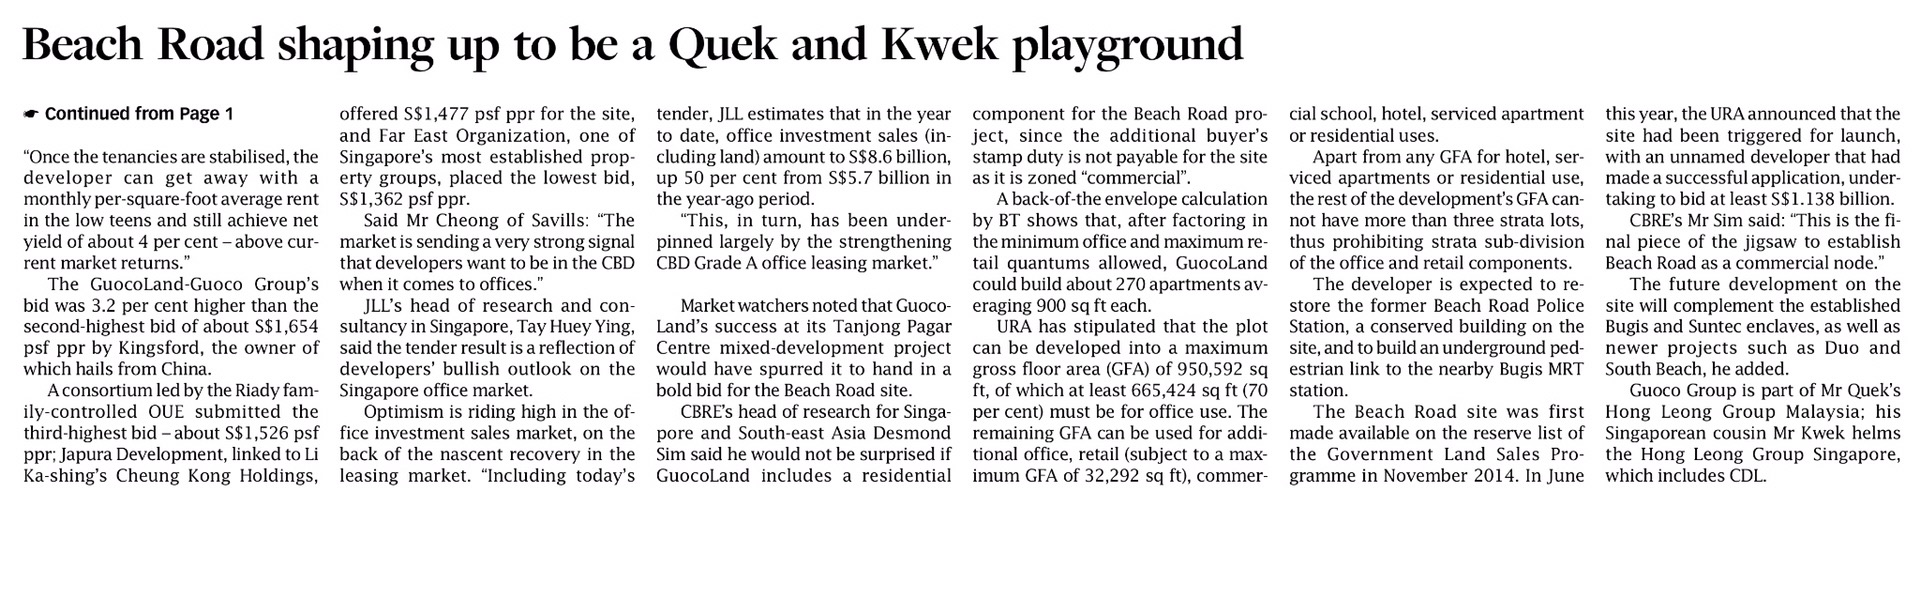 Beach Road Commercial Site Bids $1.622 billion 